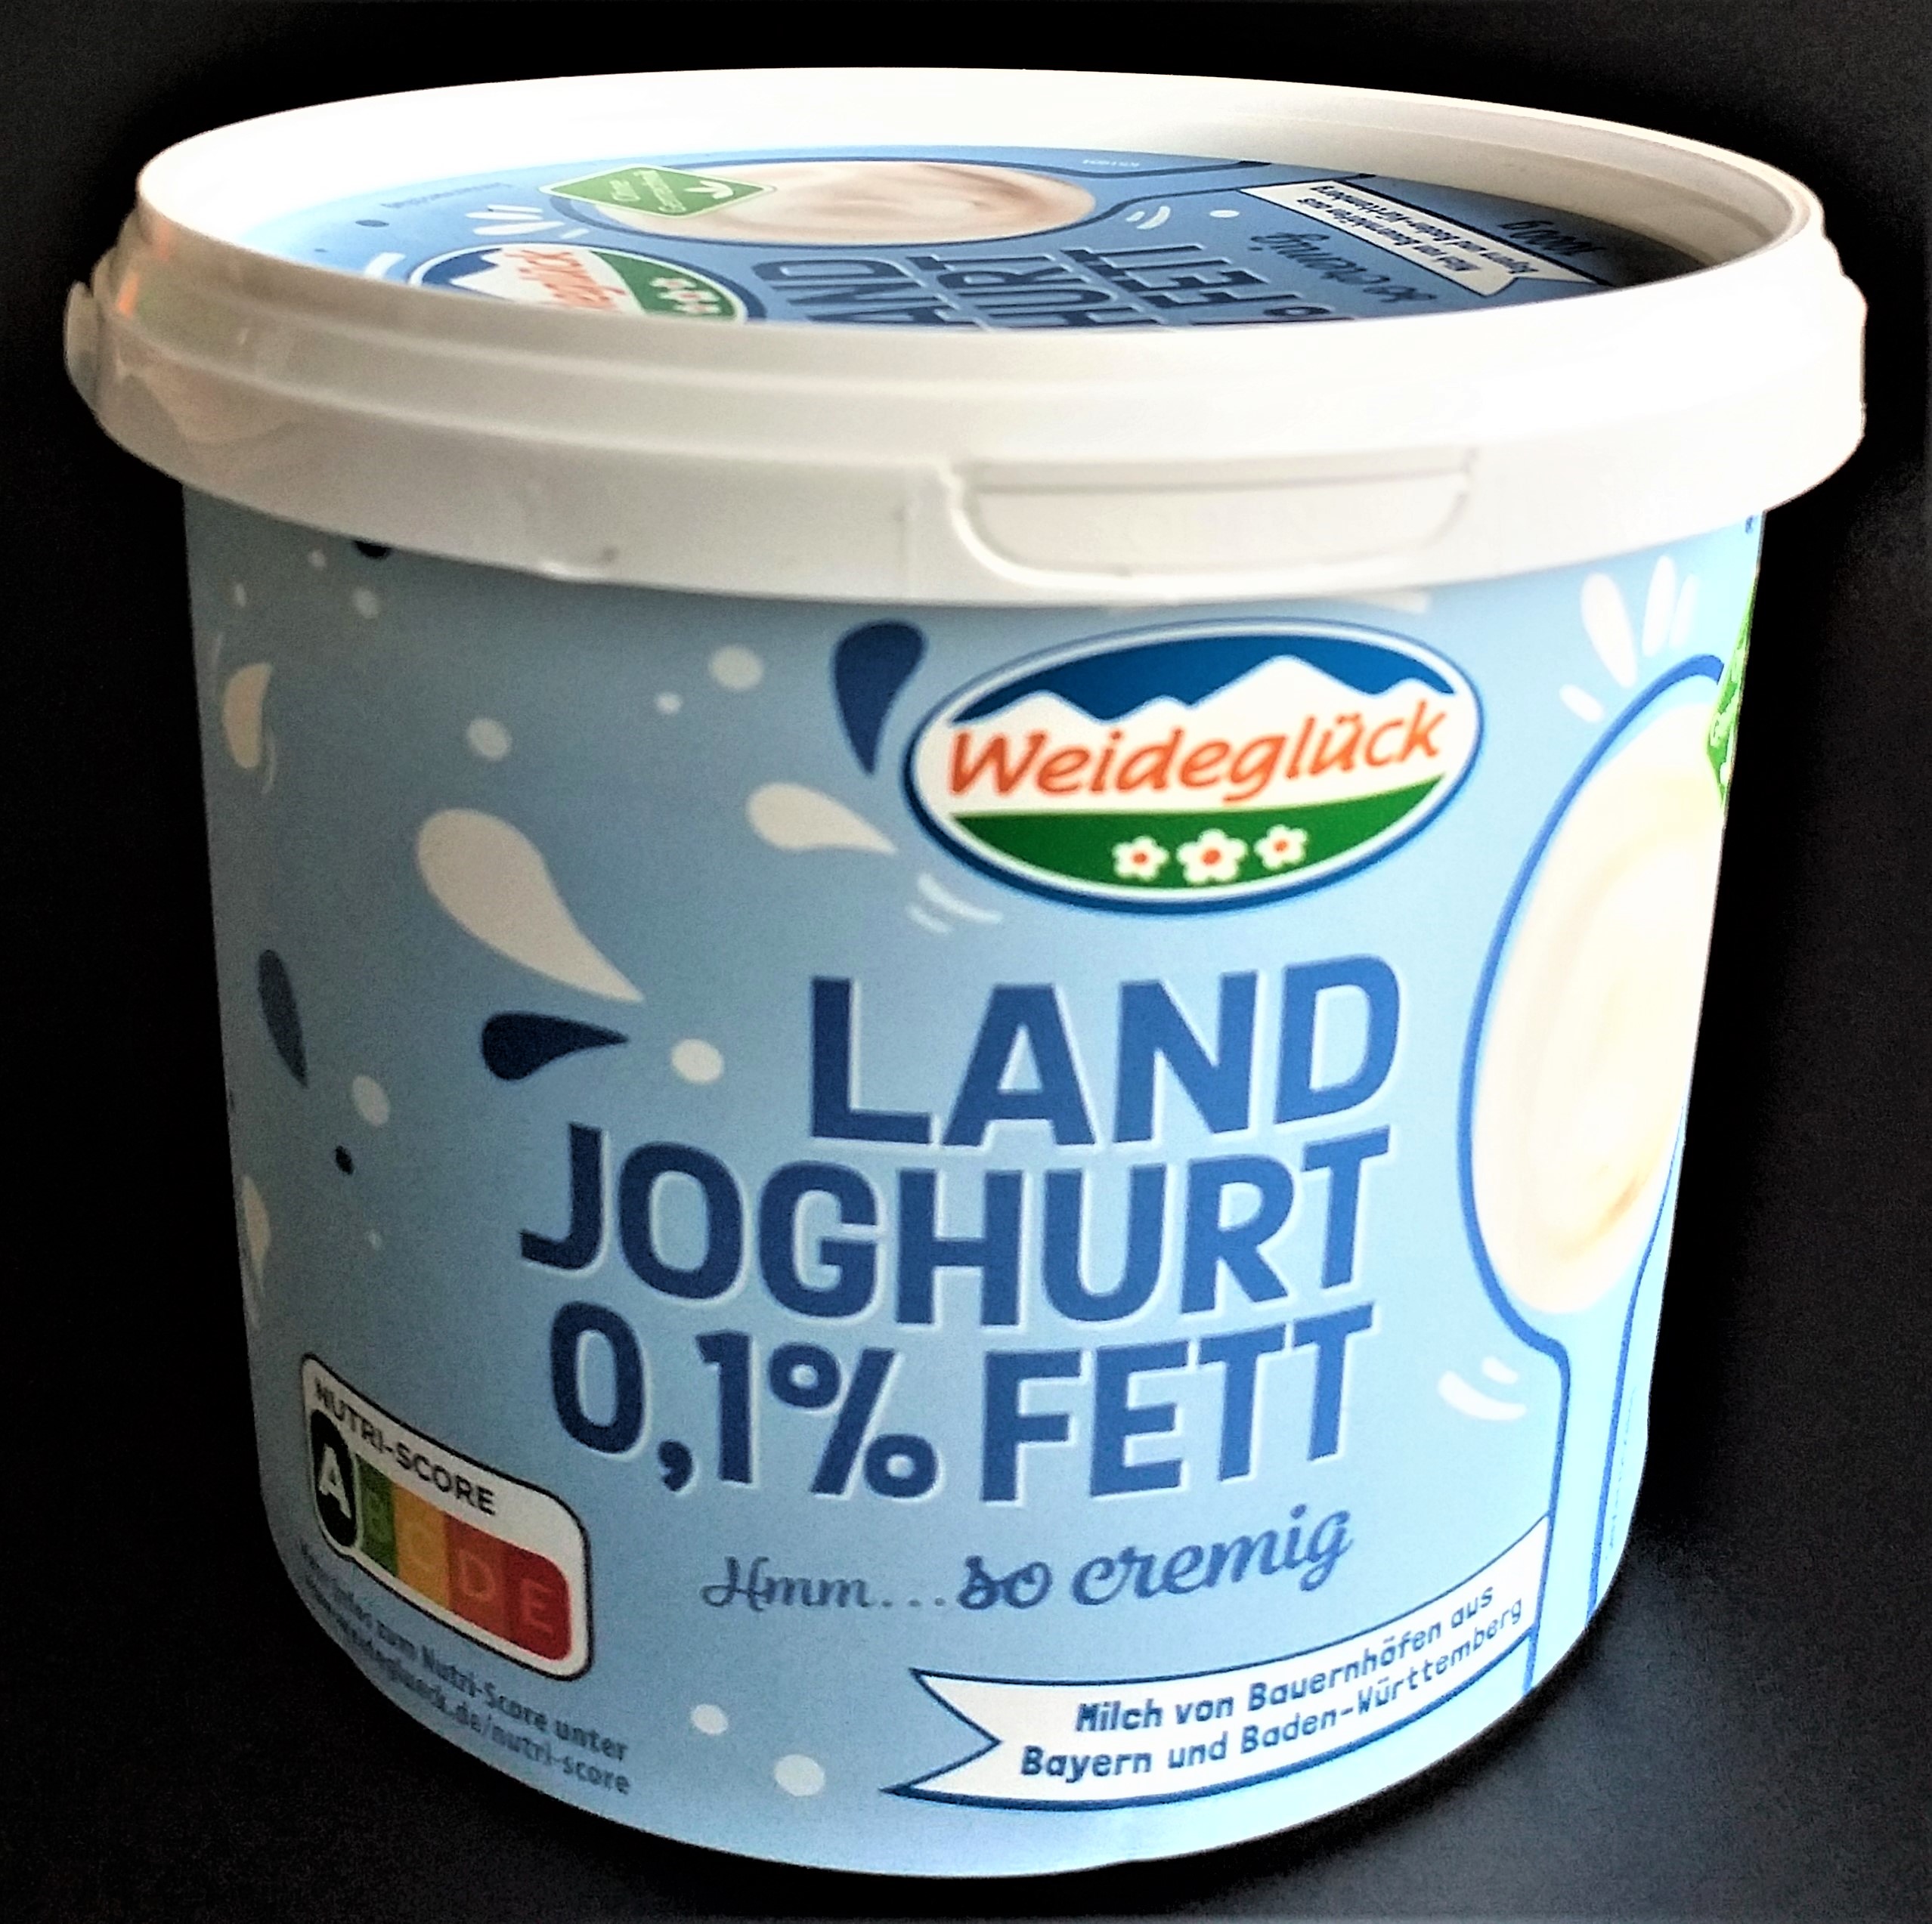 Weideglück Landjoghurt mild 0,1% Fett 1kg